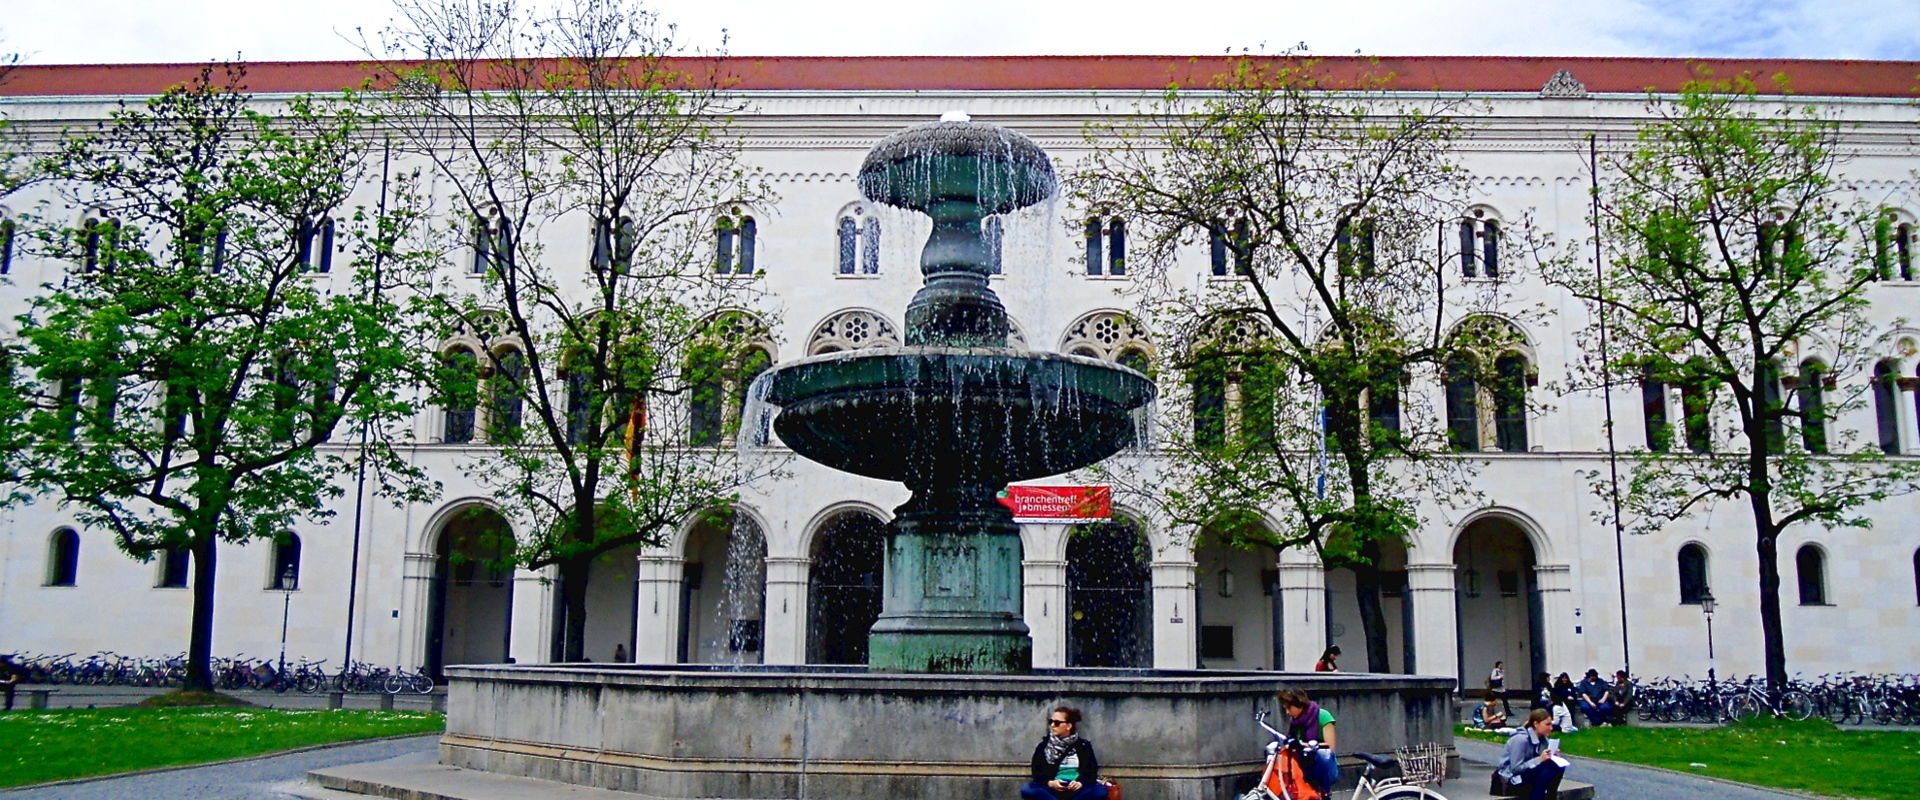 Ludwig Maximilian University